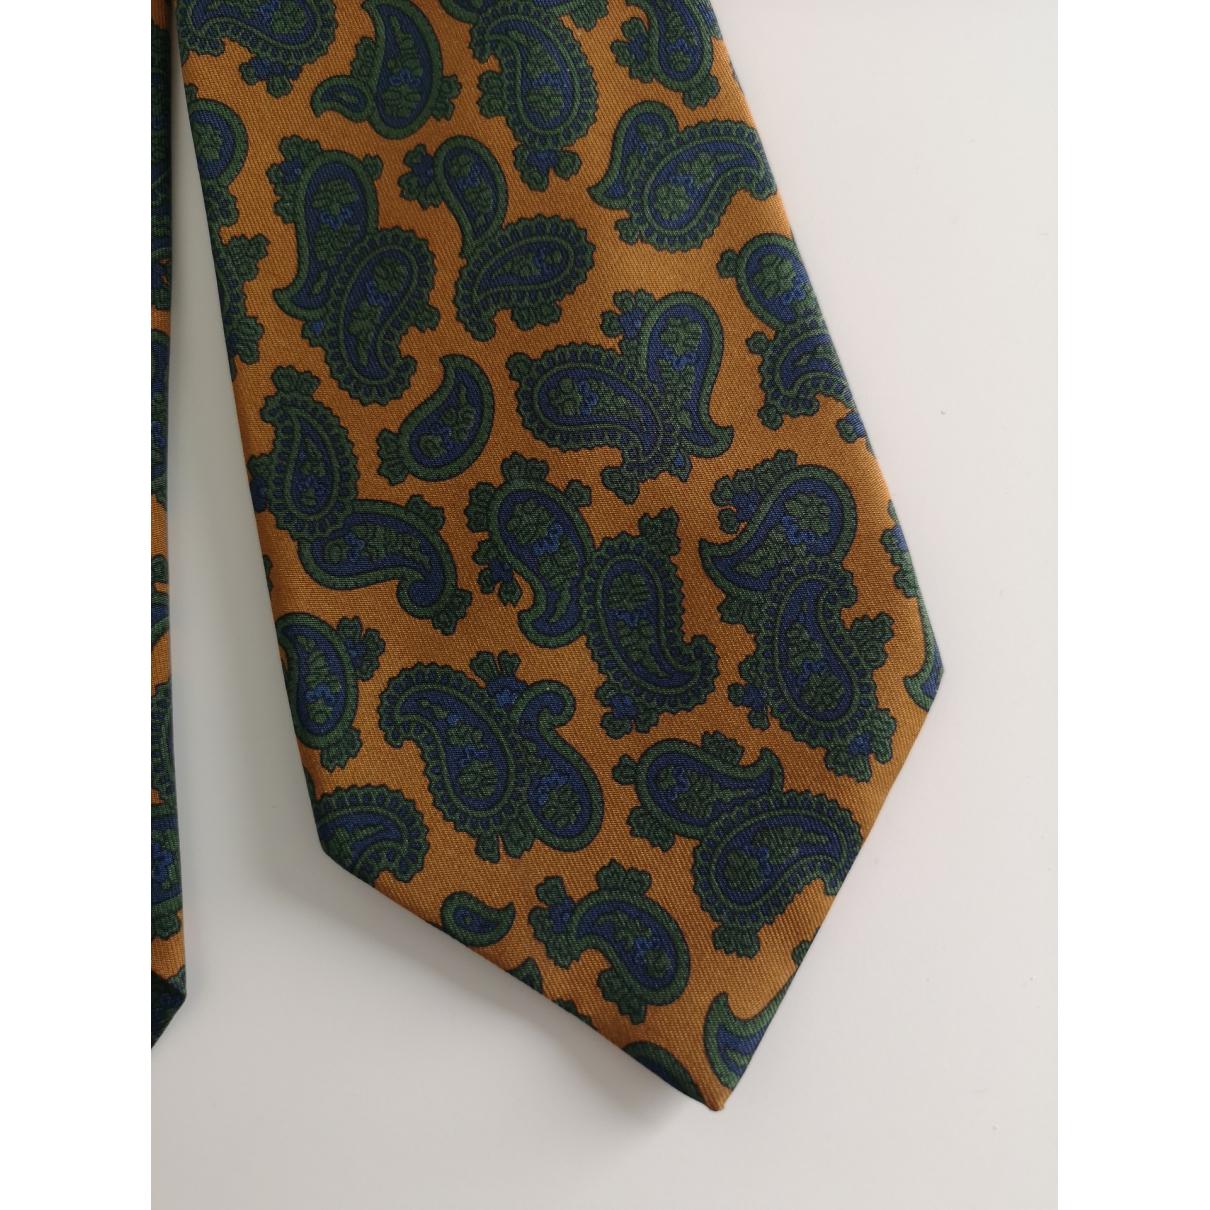 Buy Etro Silk tie online - Vintage